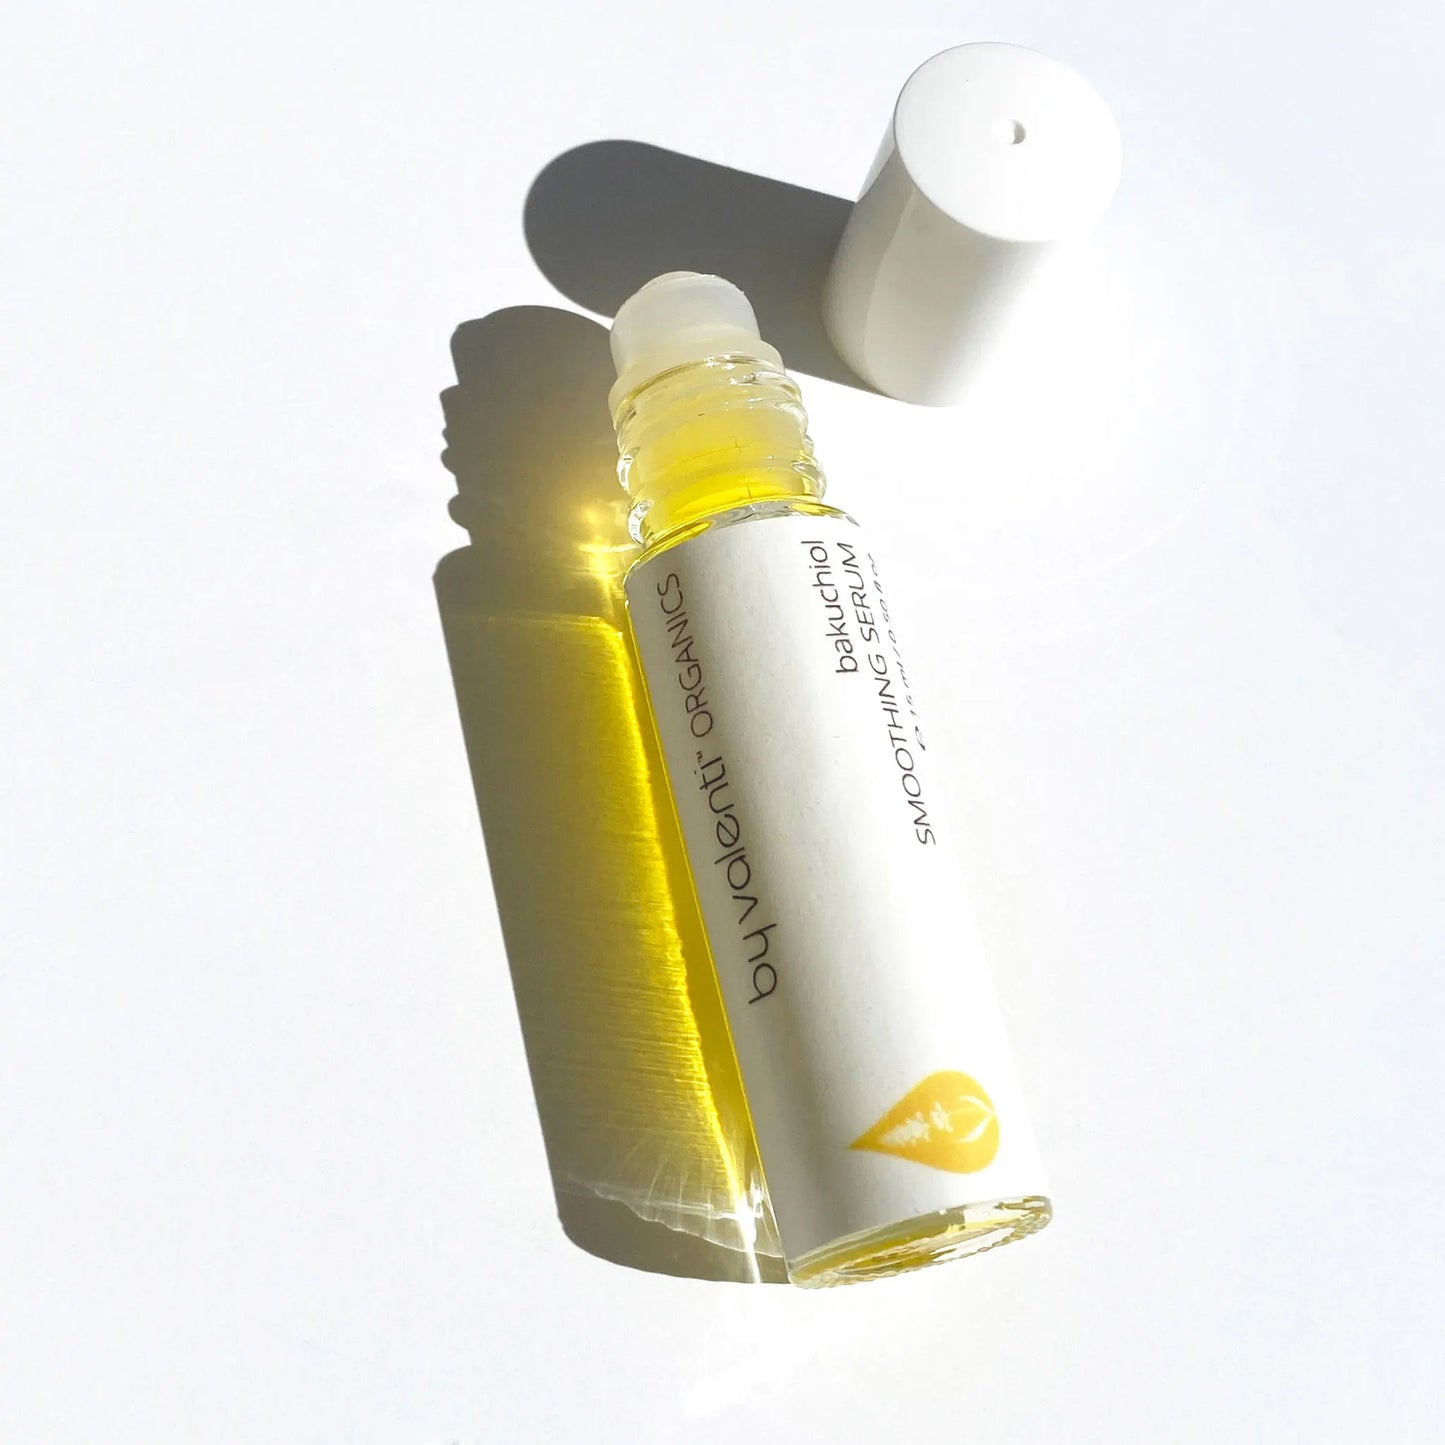 Award-winning Bakuchiol Smoothing Serum By Valenti Organics Natural Skin Care